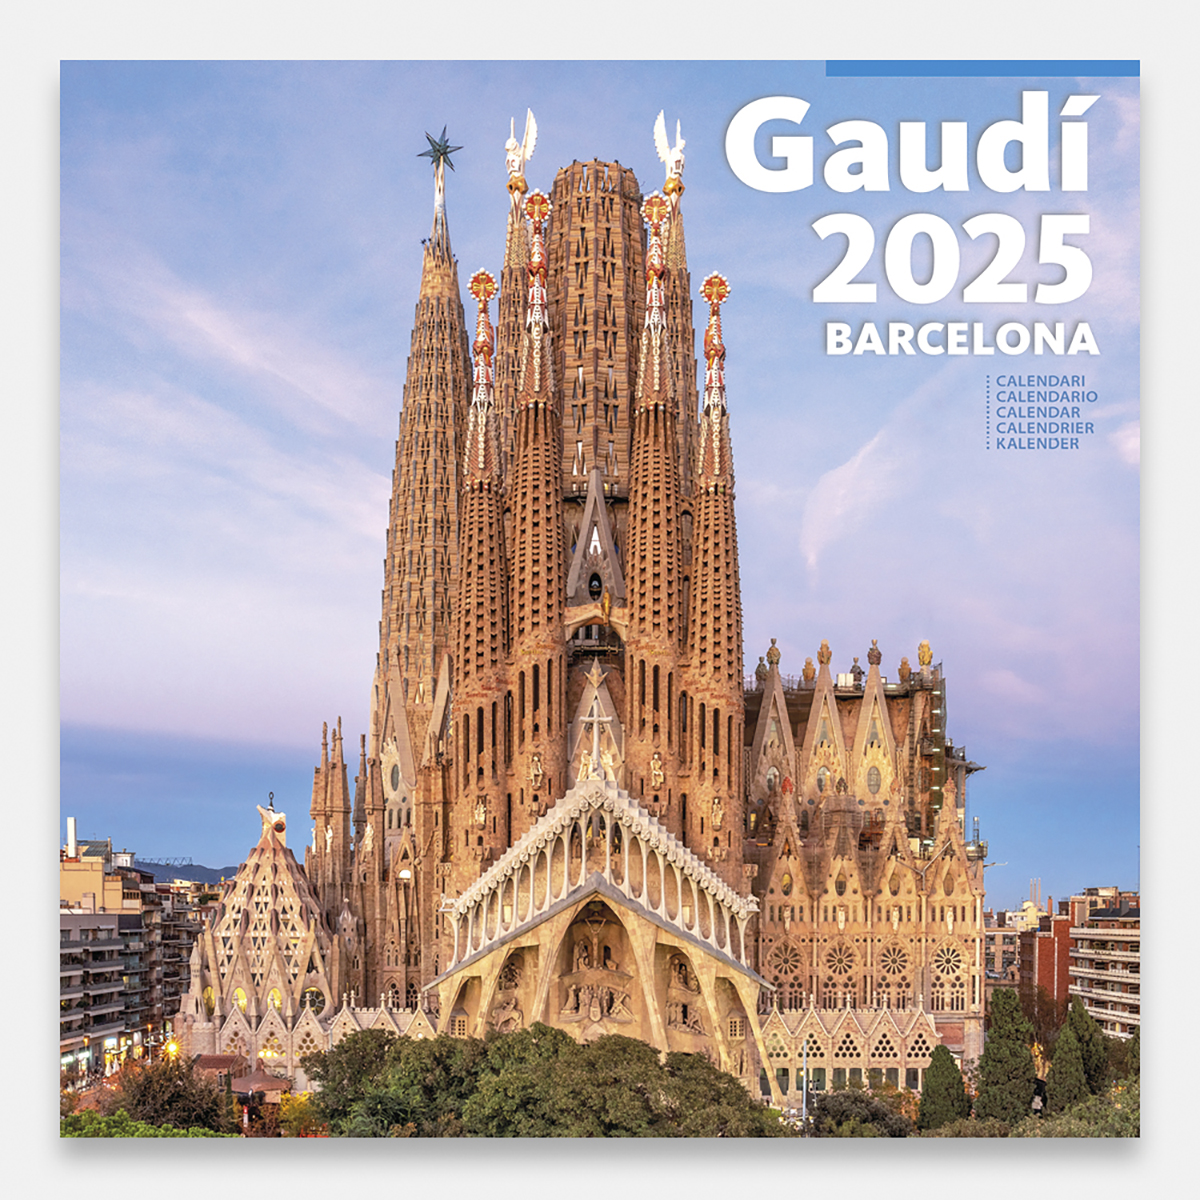 Calendari 2025 Gaudí-1 B (S. Família) 25gg1 b calendario pared 2025 gaudi sagrada familia